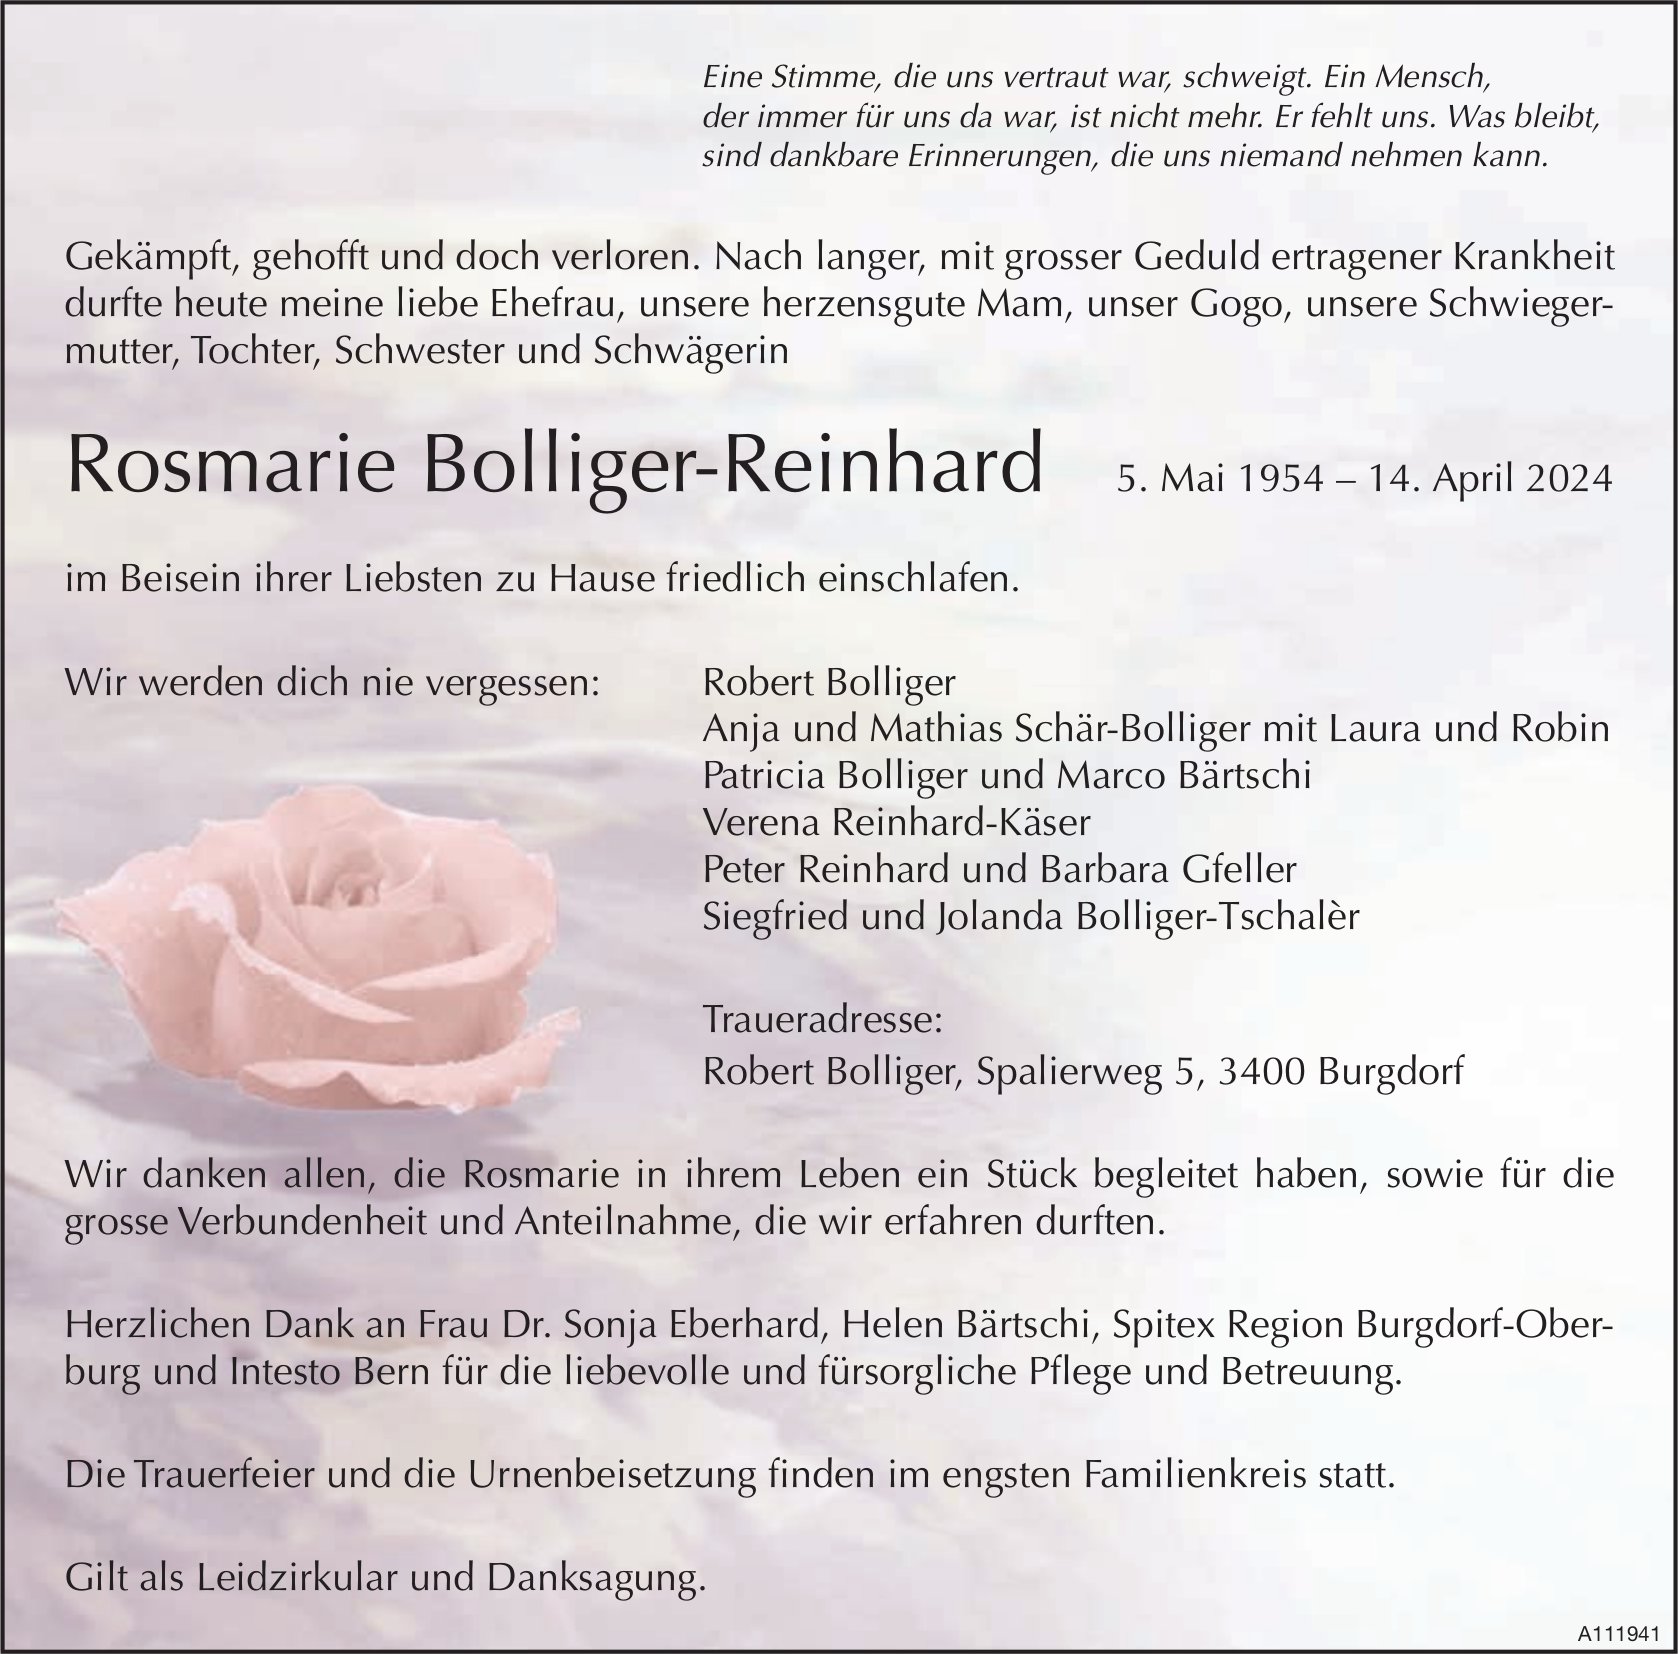 Rosmarie Bolliger- Reinhard, April 2024 / TA